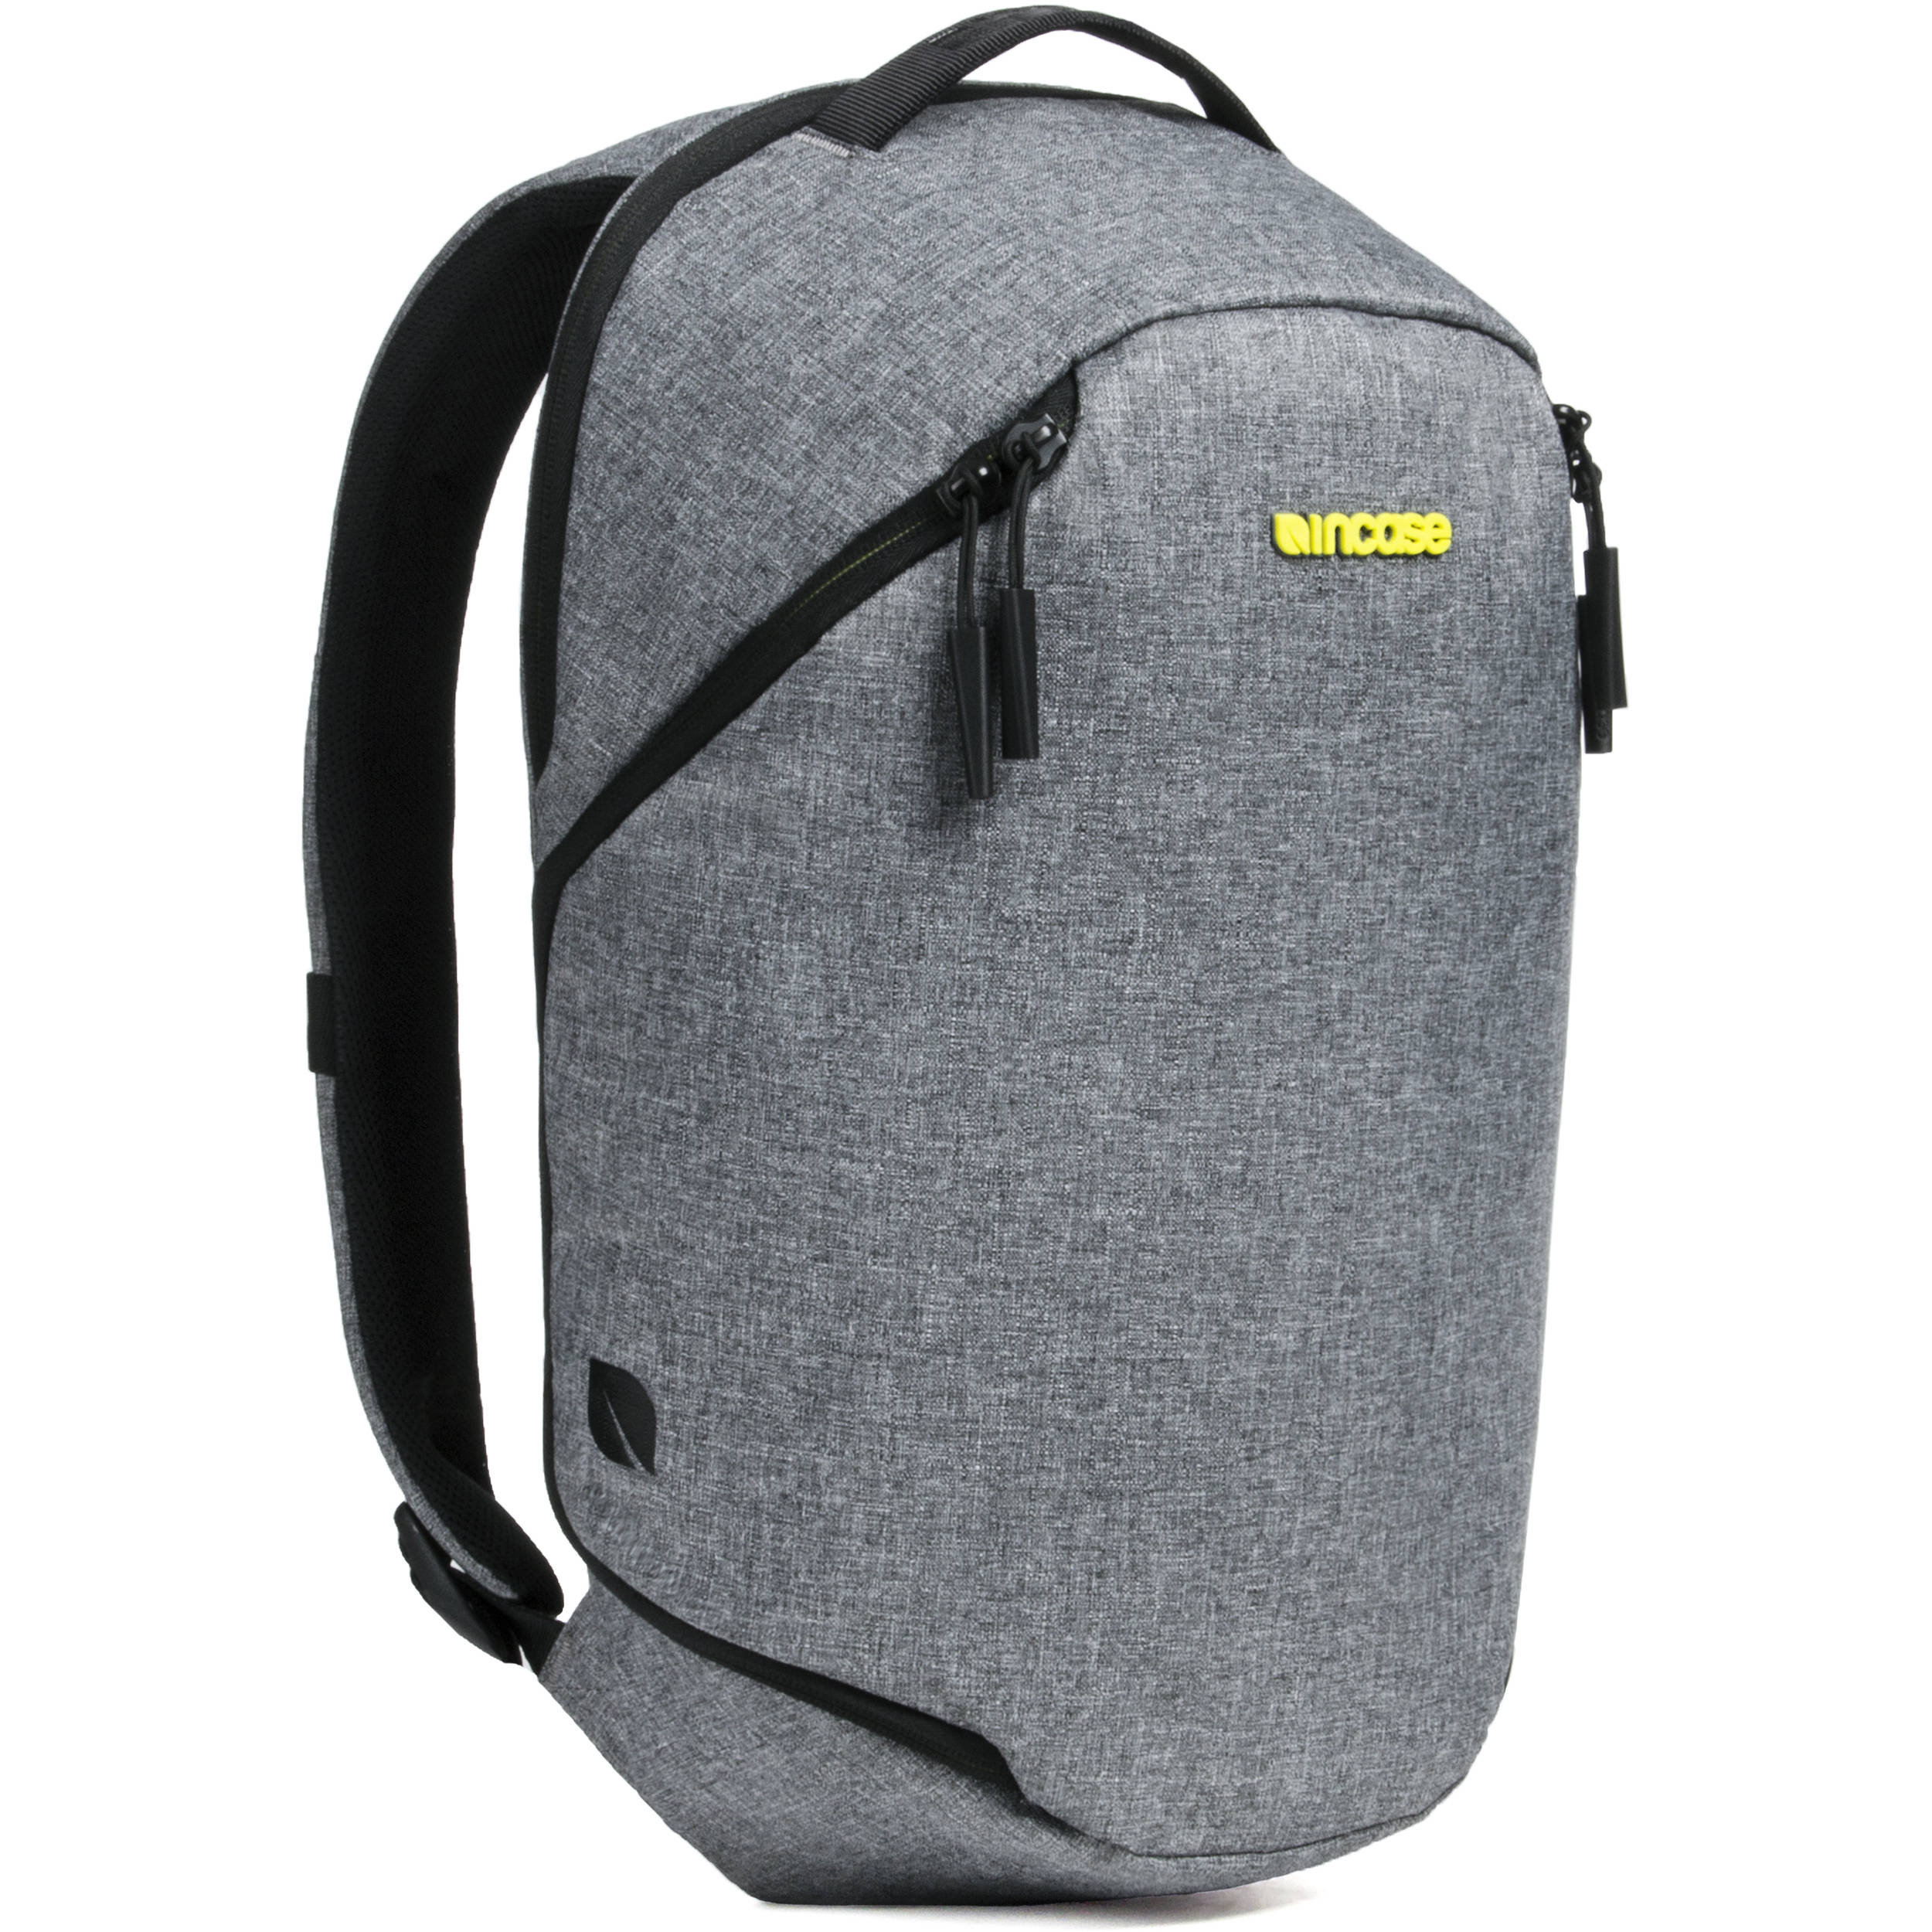 incase camera backpack